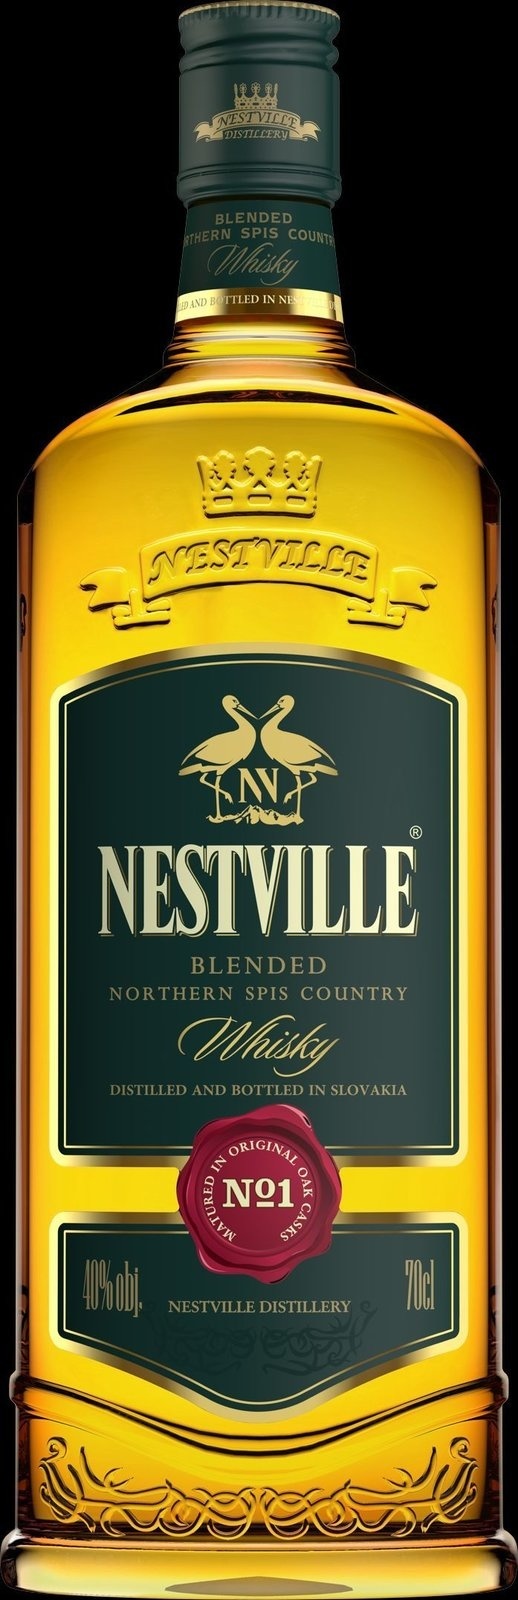 Nestville whisky patrí medzi